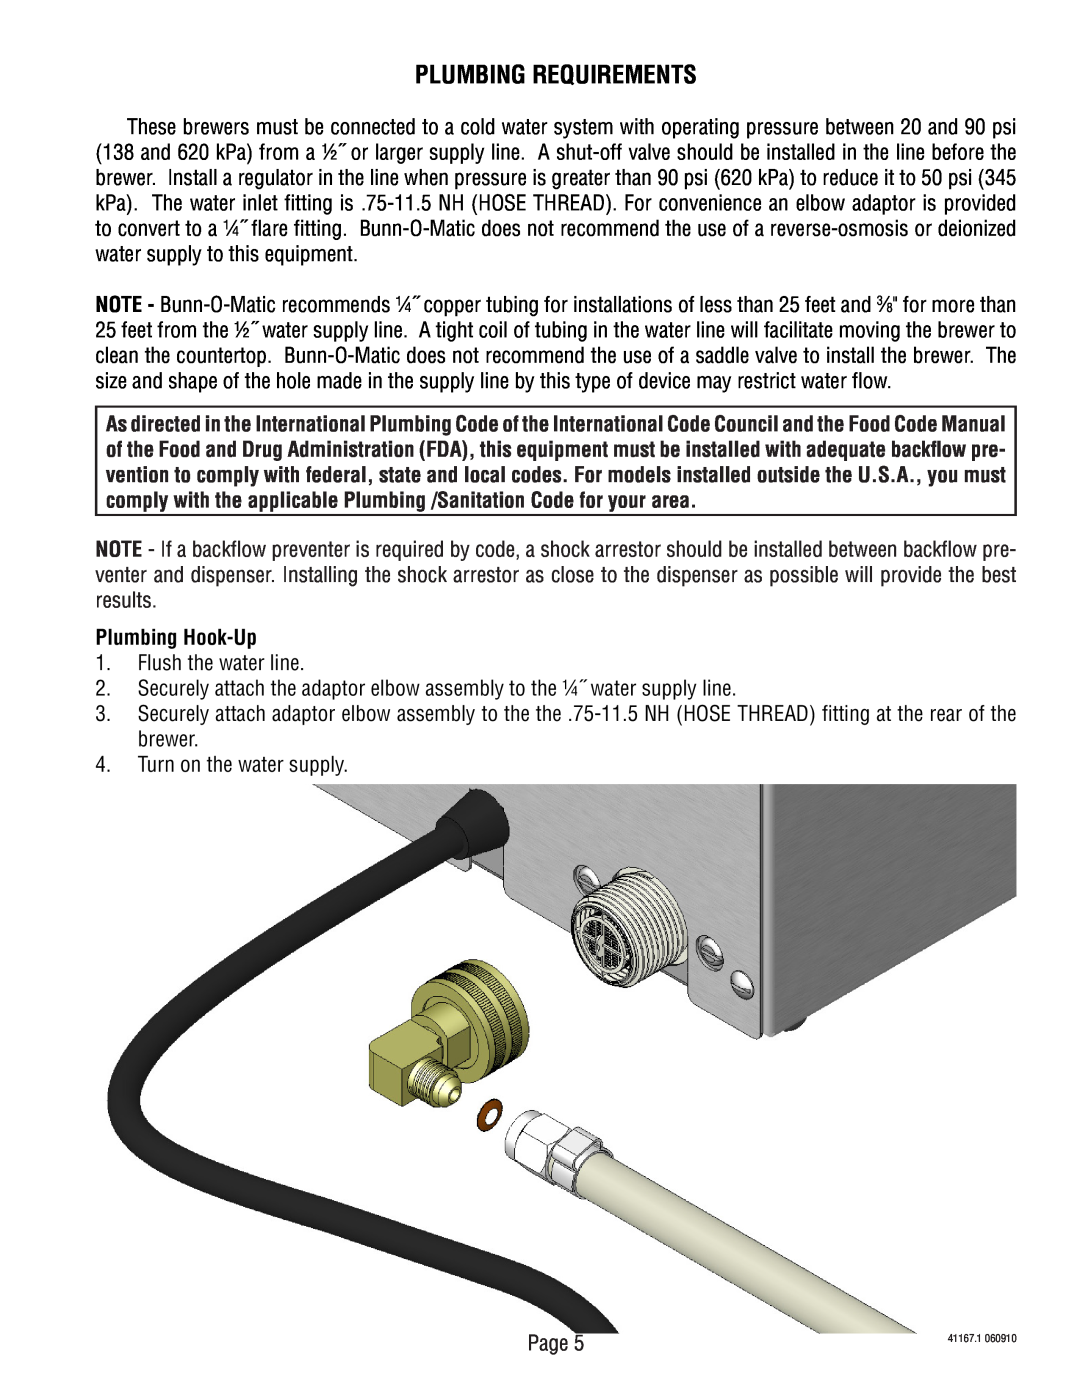 Bunn 41167.0001B service manual Plumbing Requirements, Plumbing Hook-Up 